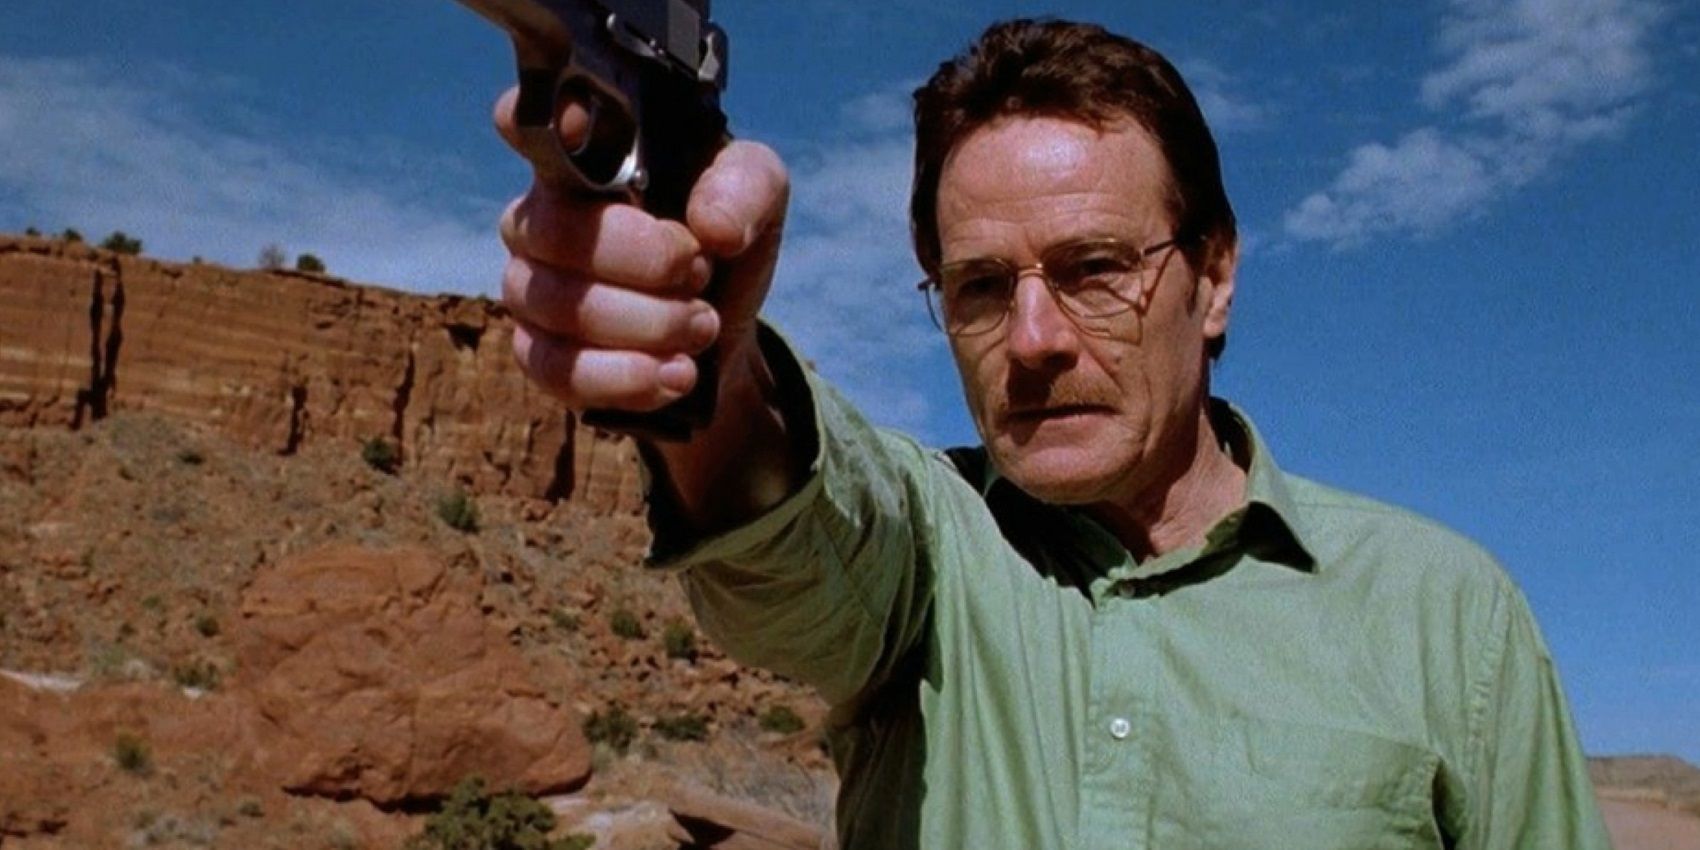 Walt with a gun in Breaking Bad